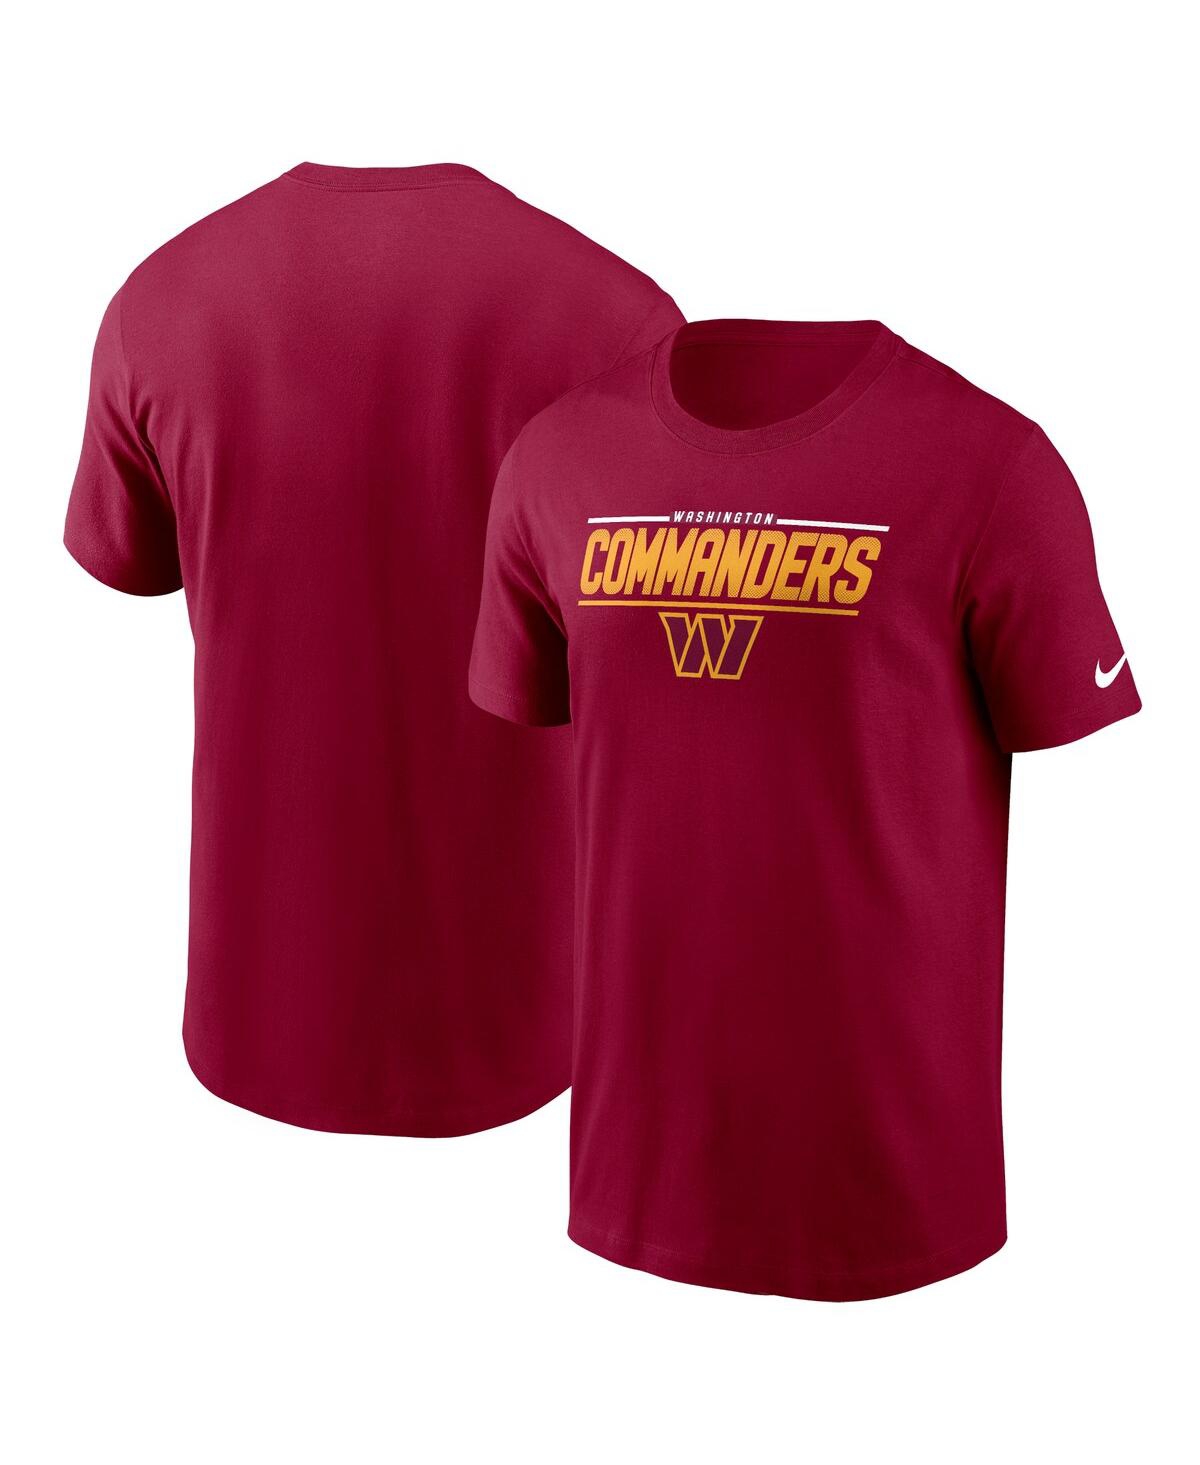 Nike Men's  Burgundy Washington Commanders Muscle T-shirt